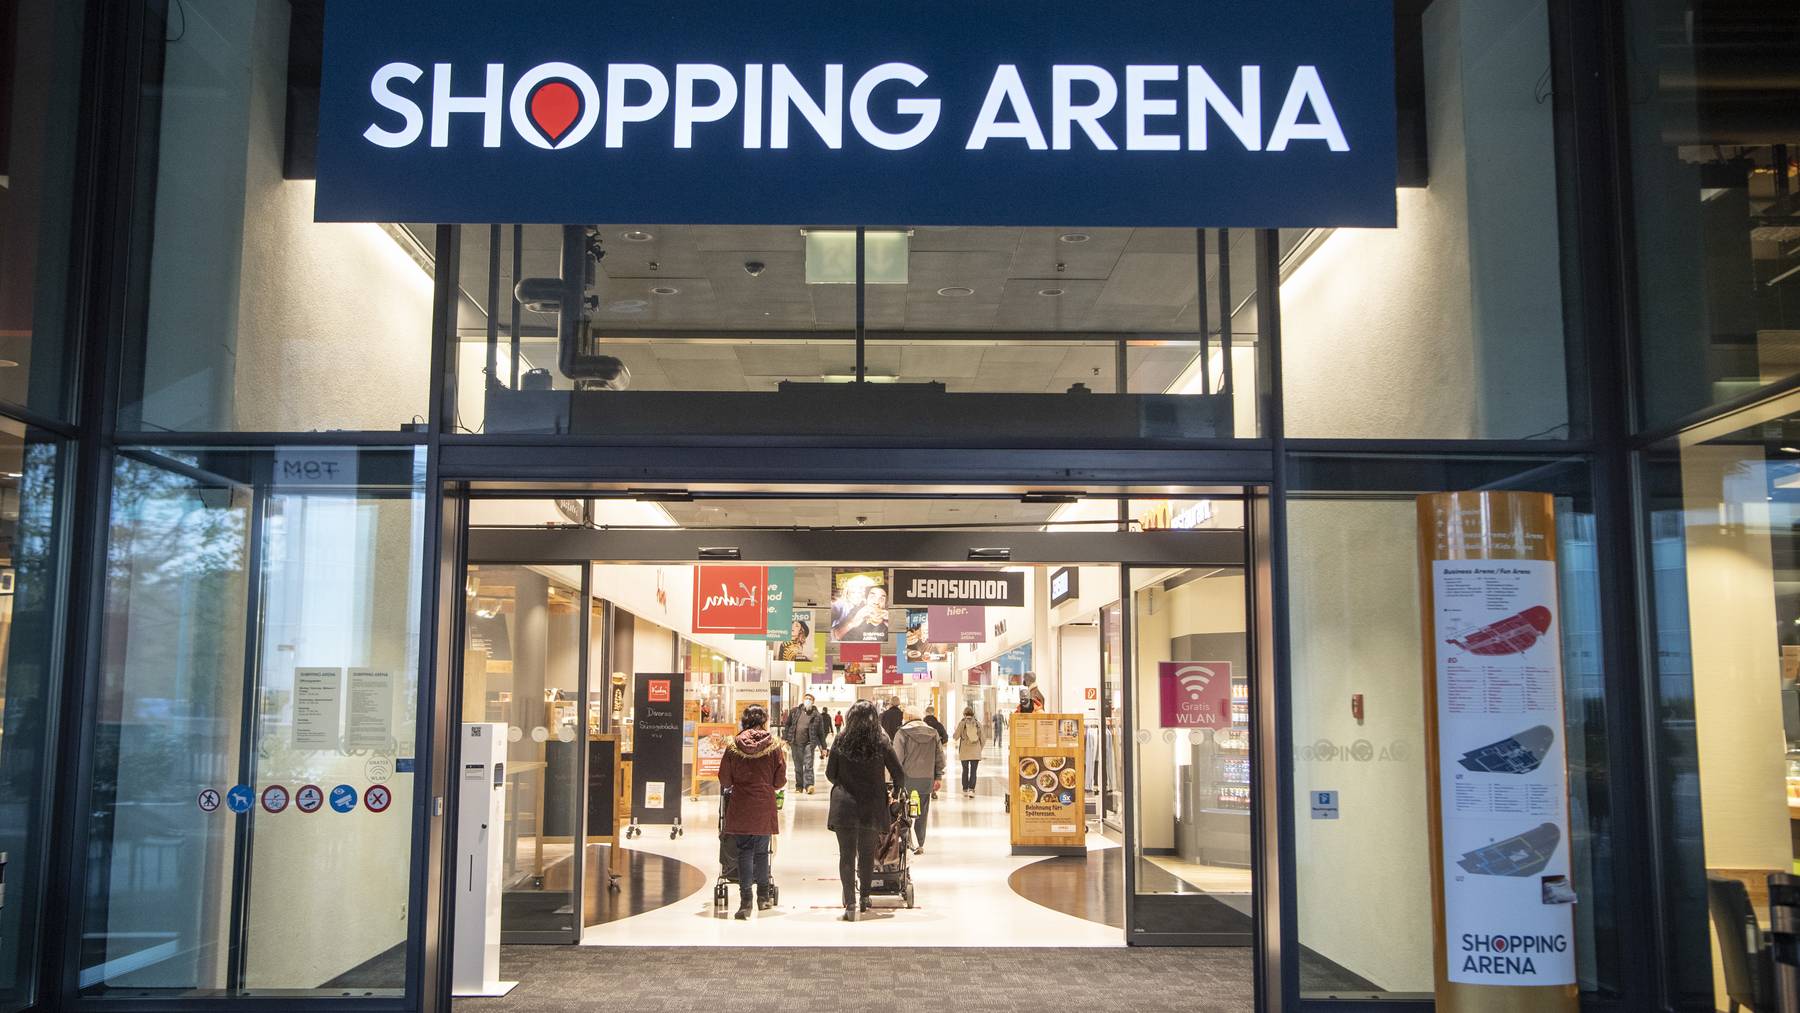 Shopping Arena